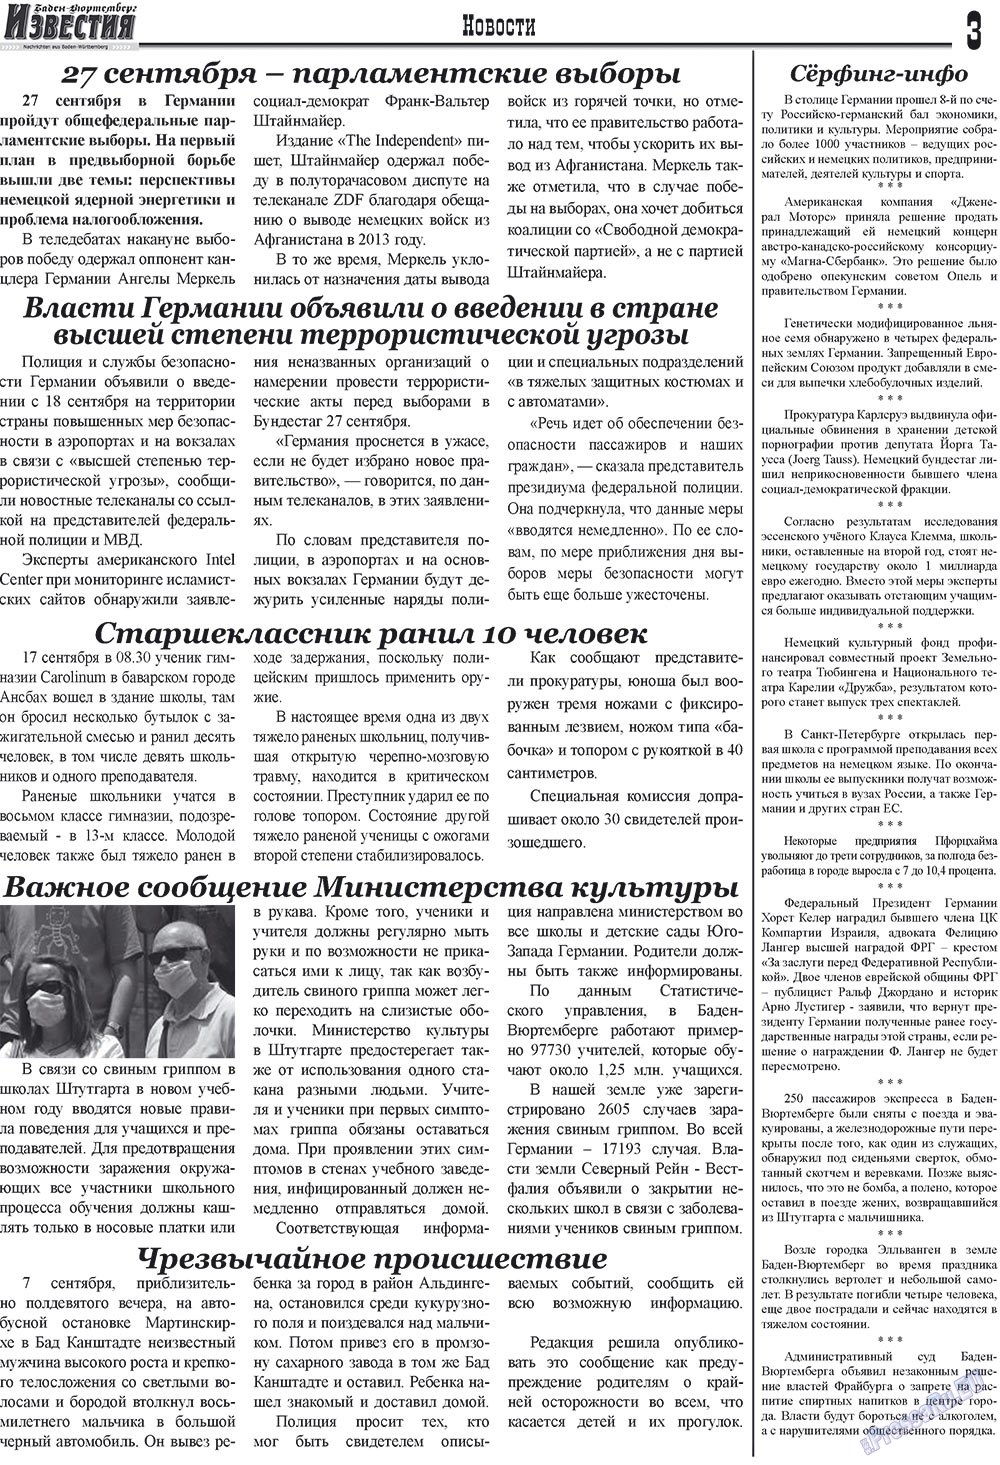 Известия BW (газета). 2009 год, номер 8, стр. 3